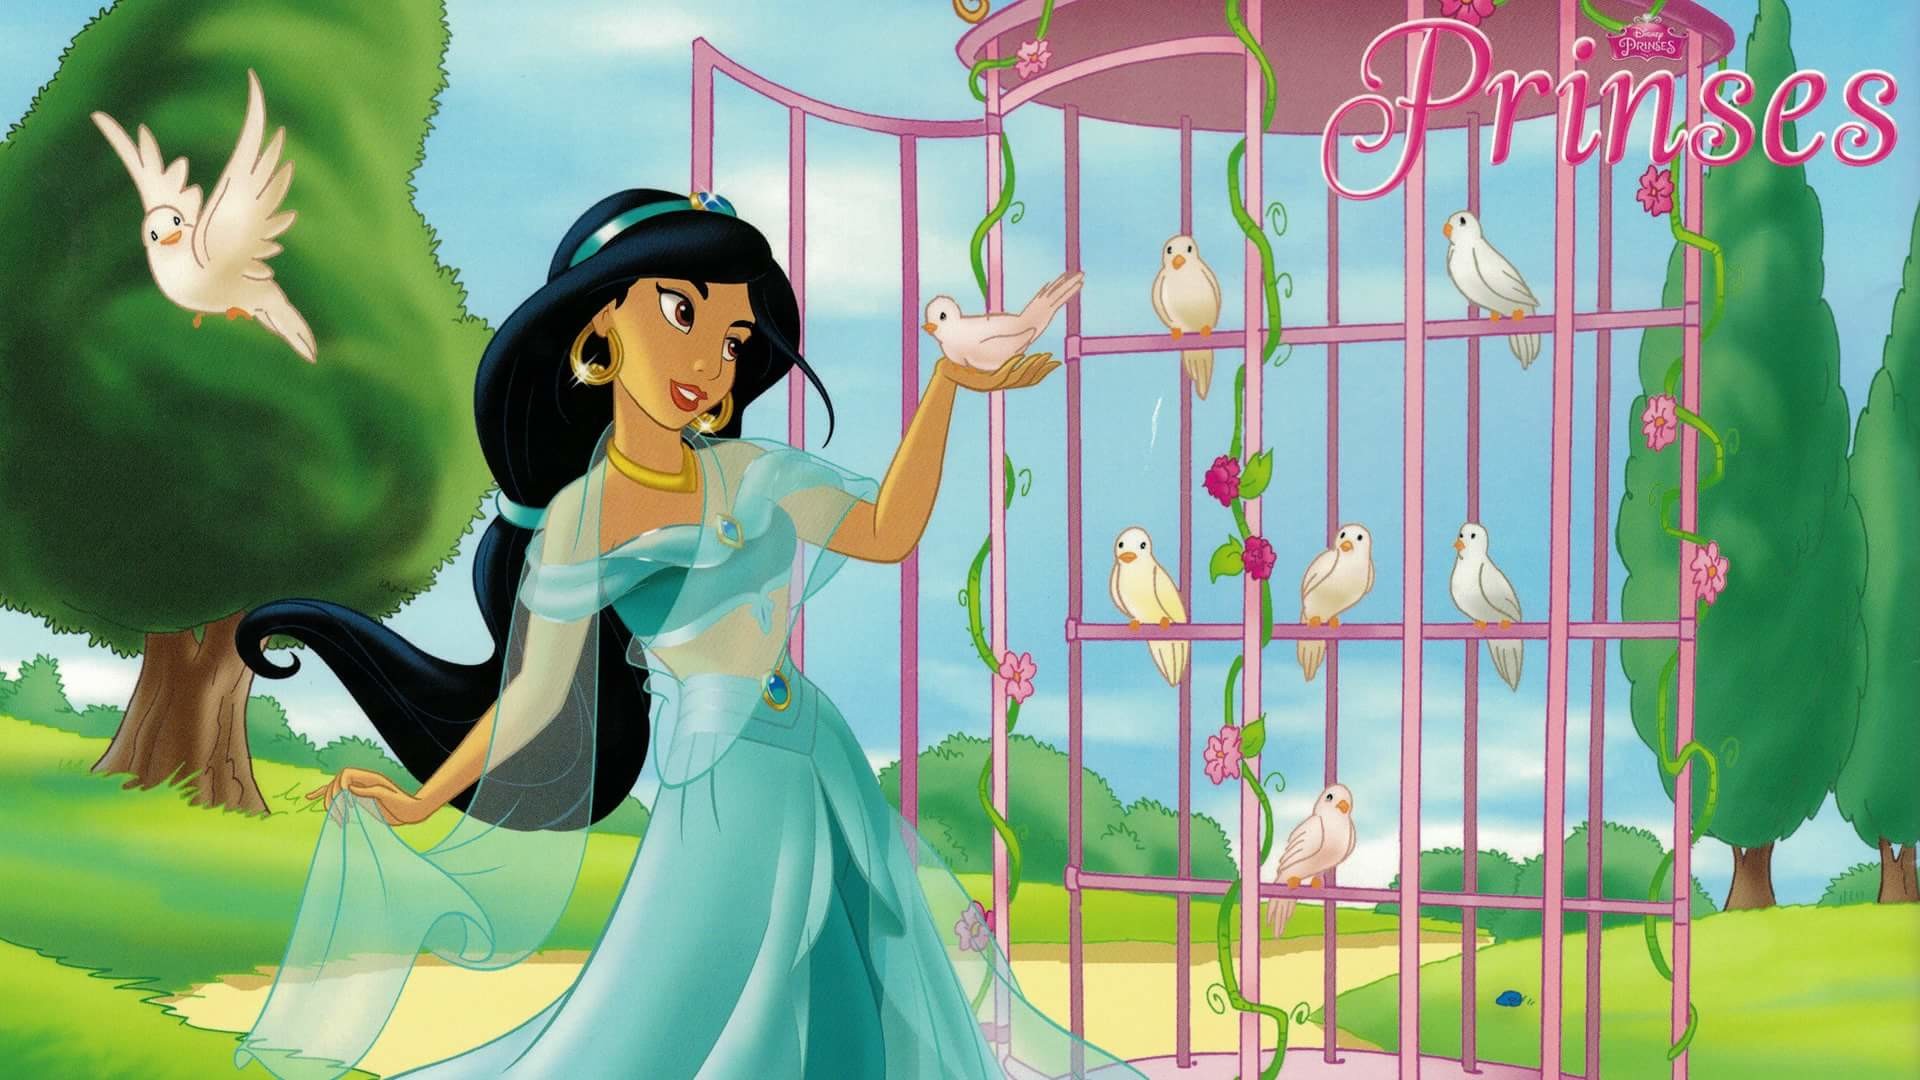 1920x1080 Disney Princess images Princess Jasmine HD wallpaper and background photos